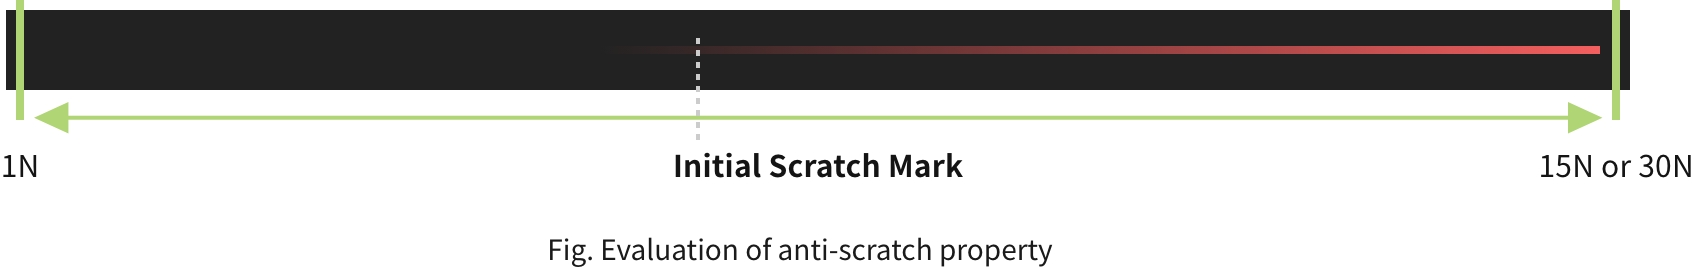 Evaluation of anti-scratch property